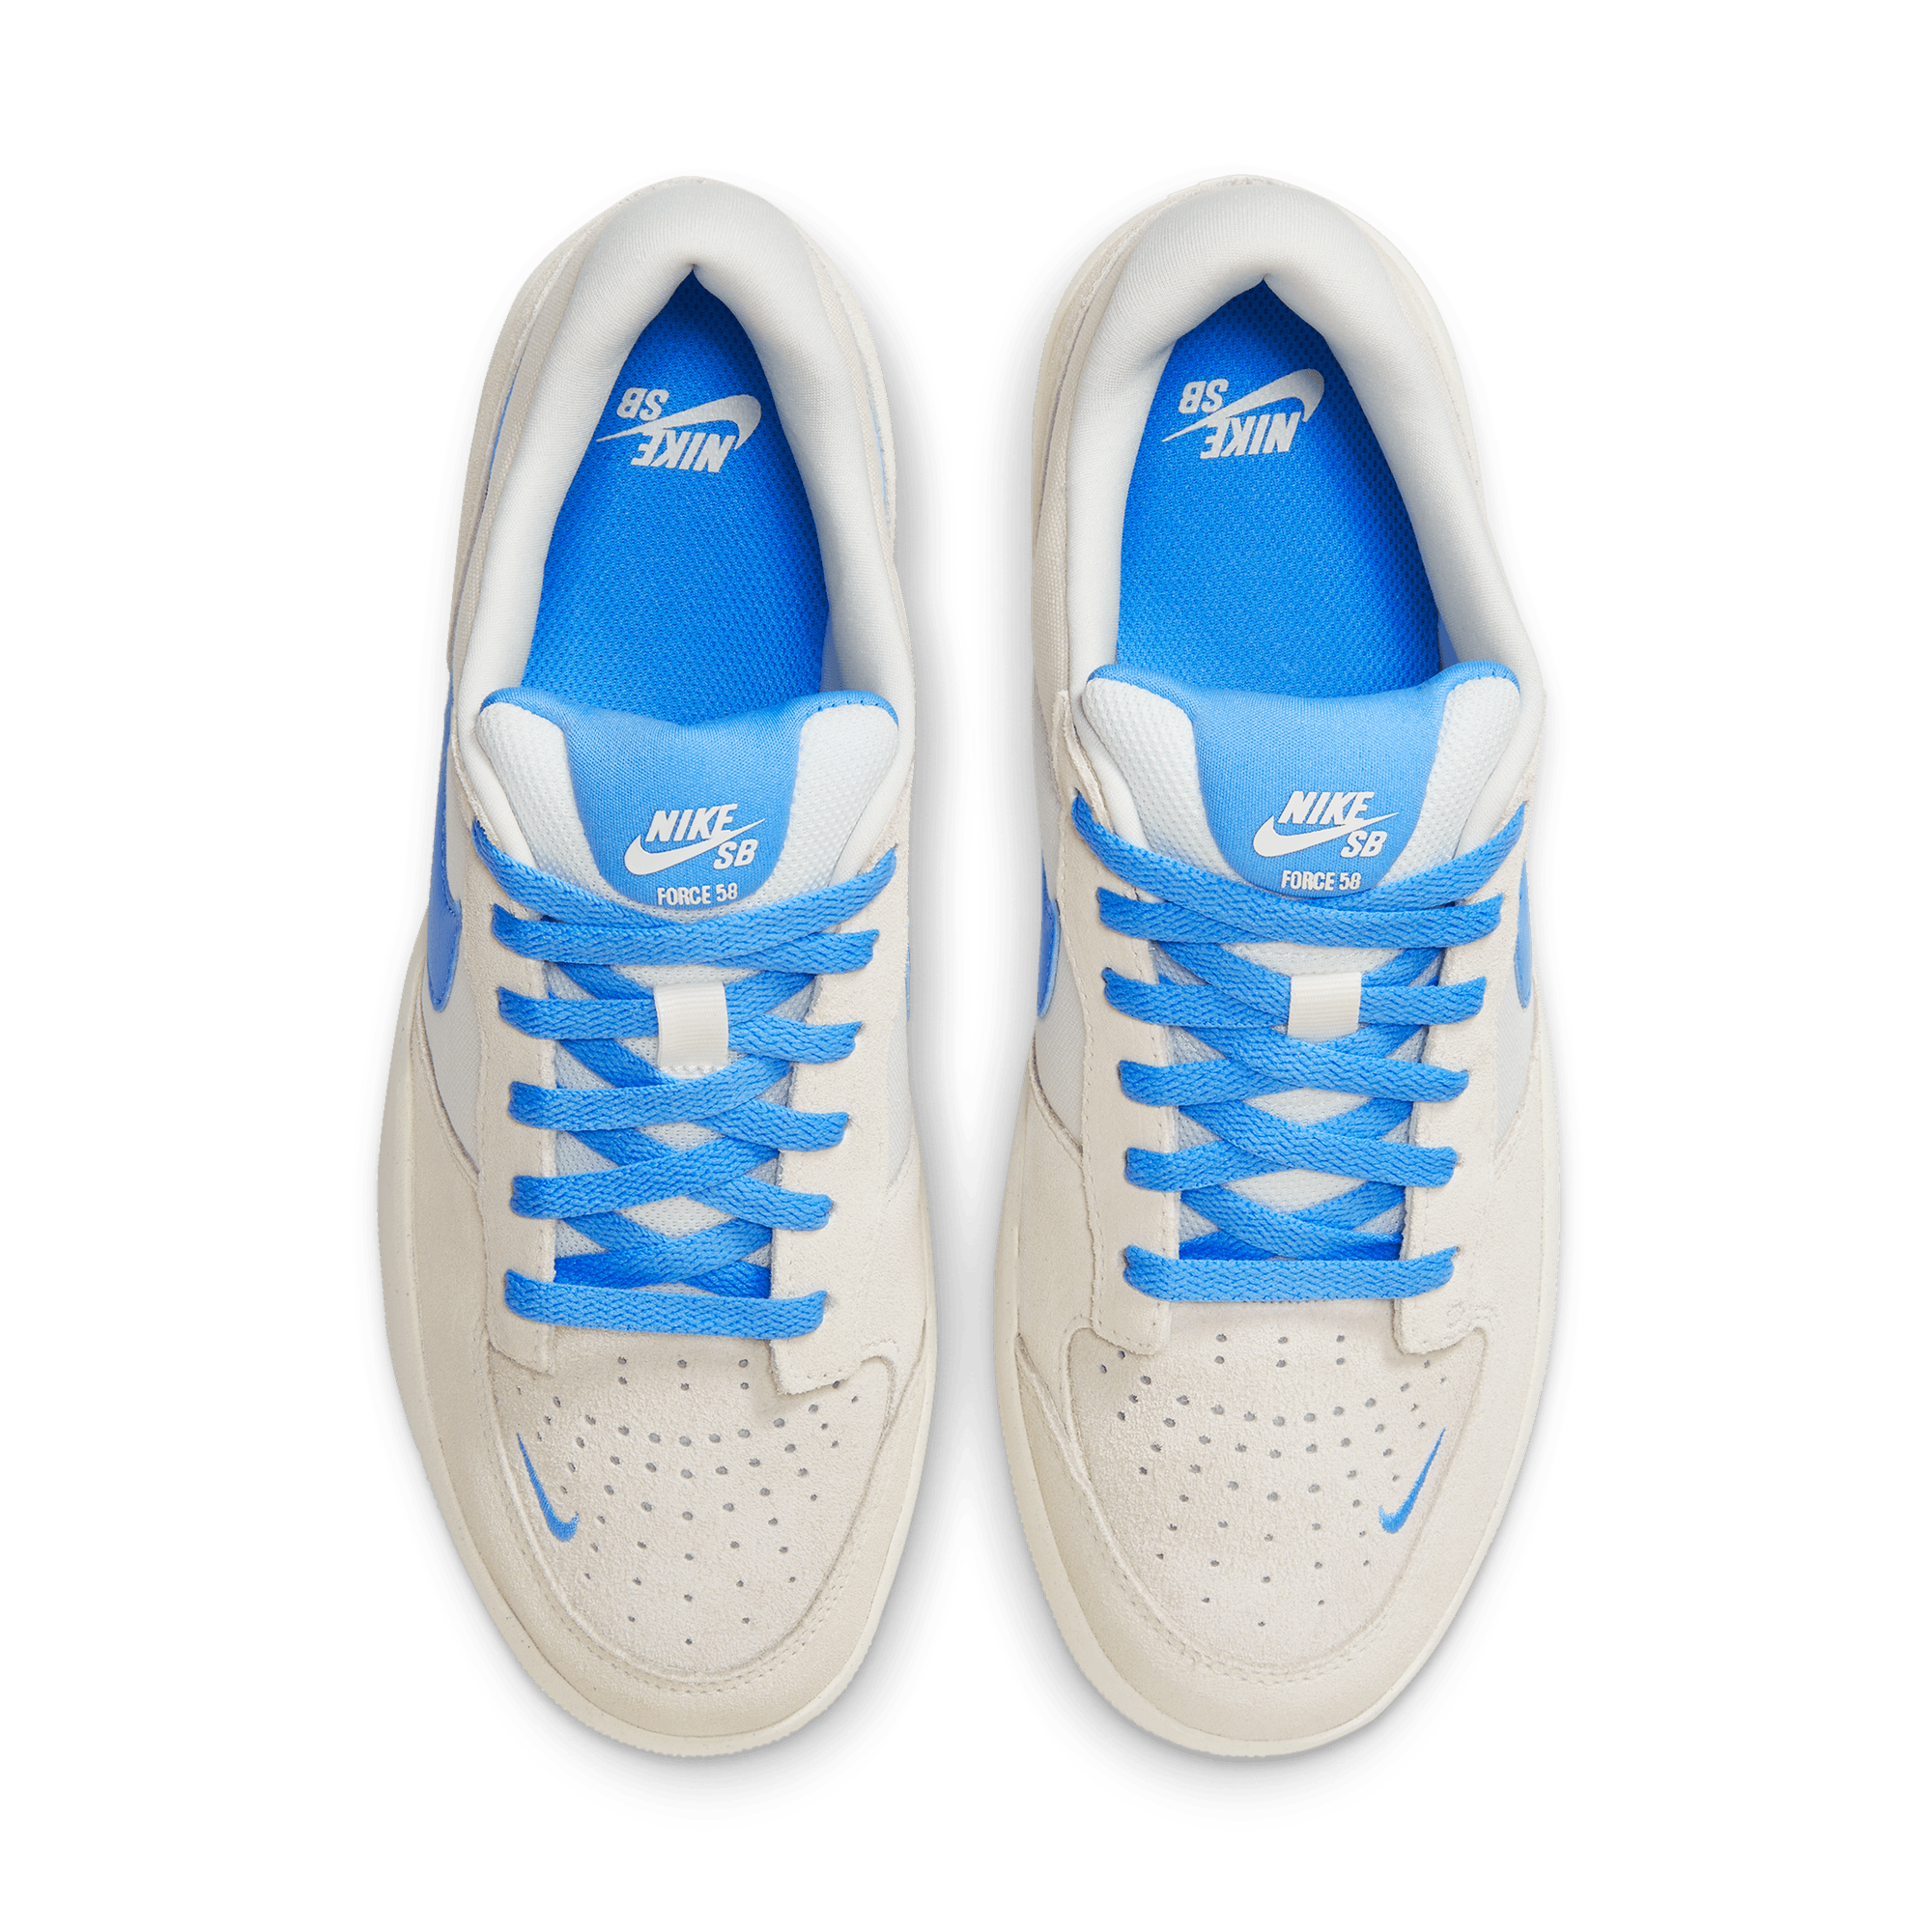 Summit White/University Blue Force 58 Nike SB Skate Shoe Top